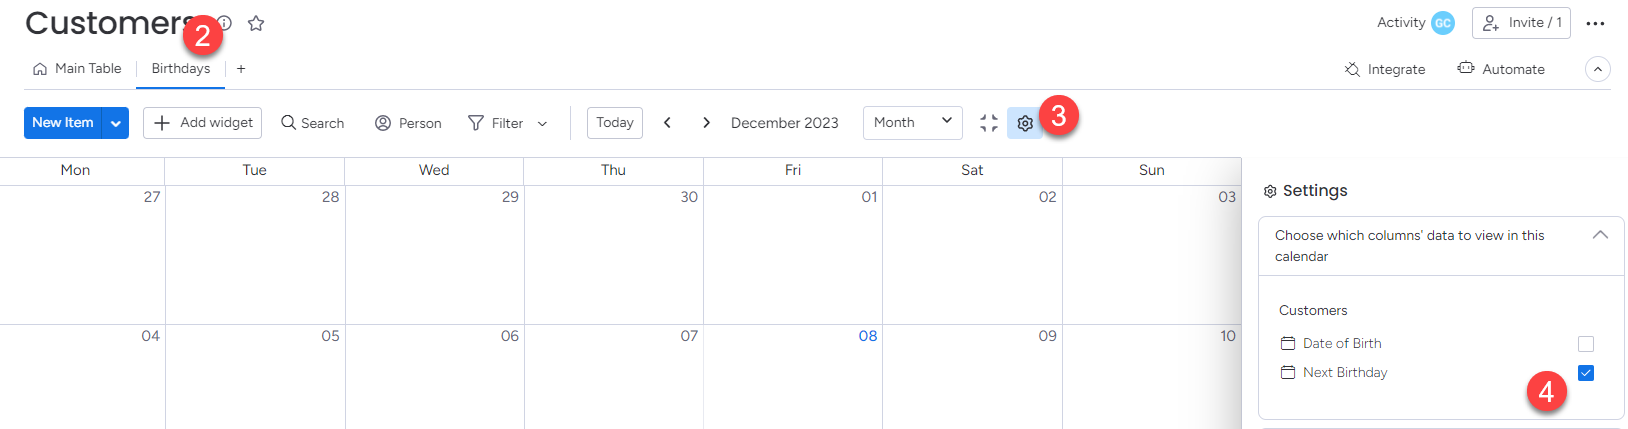 Configure the calendar